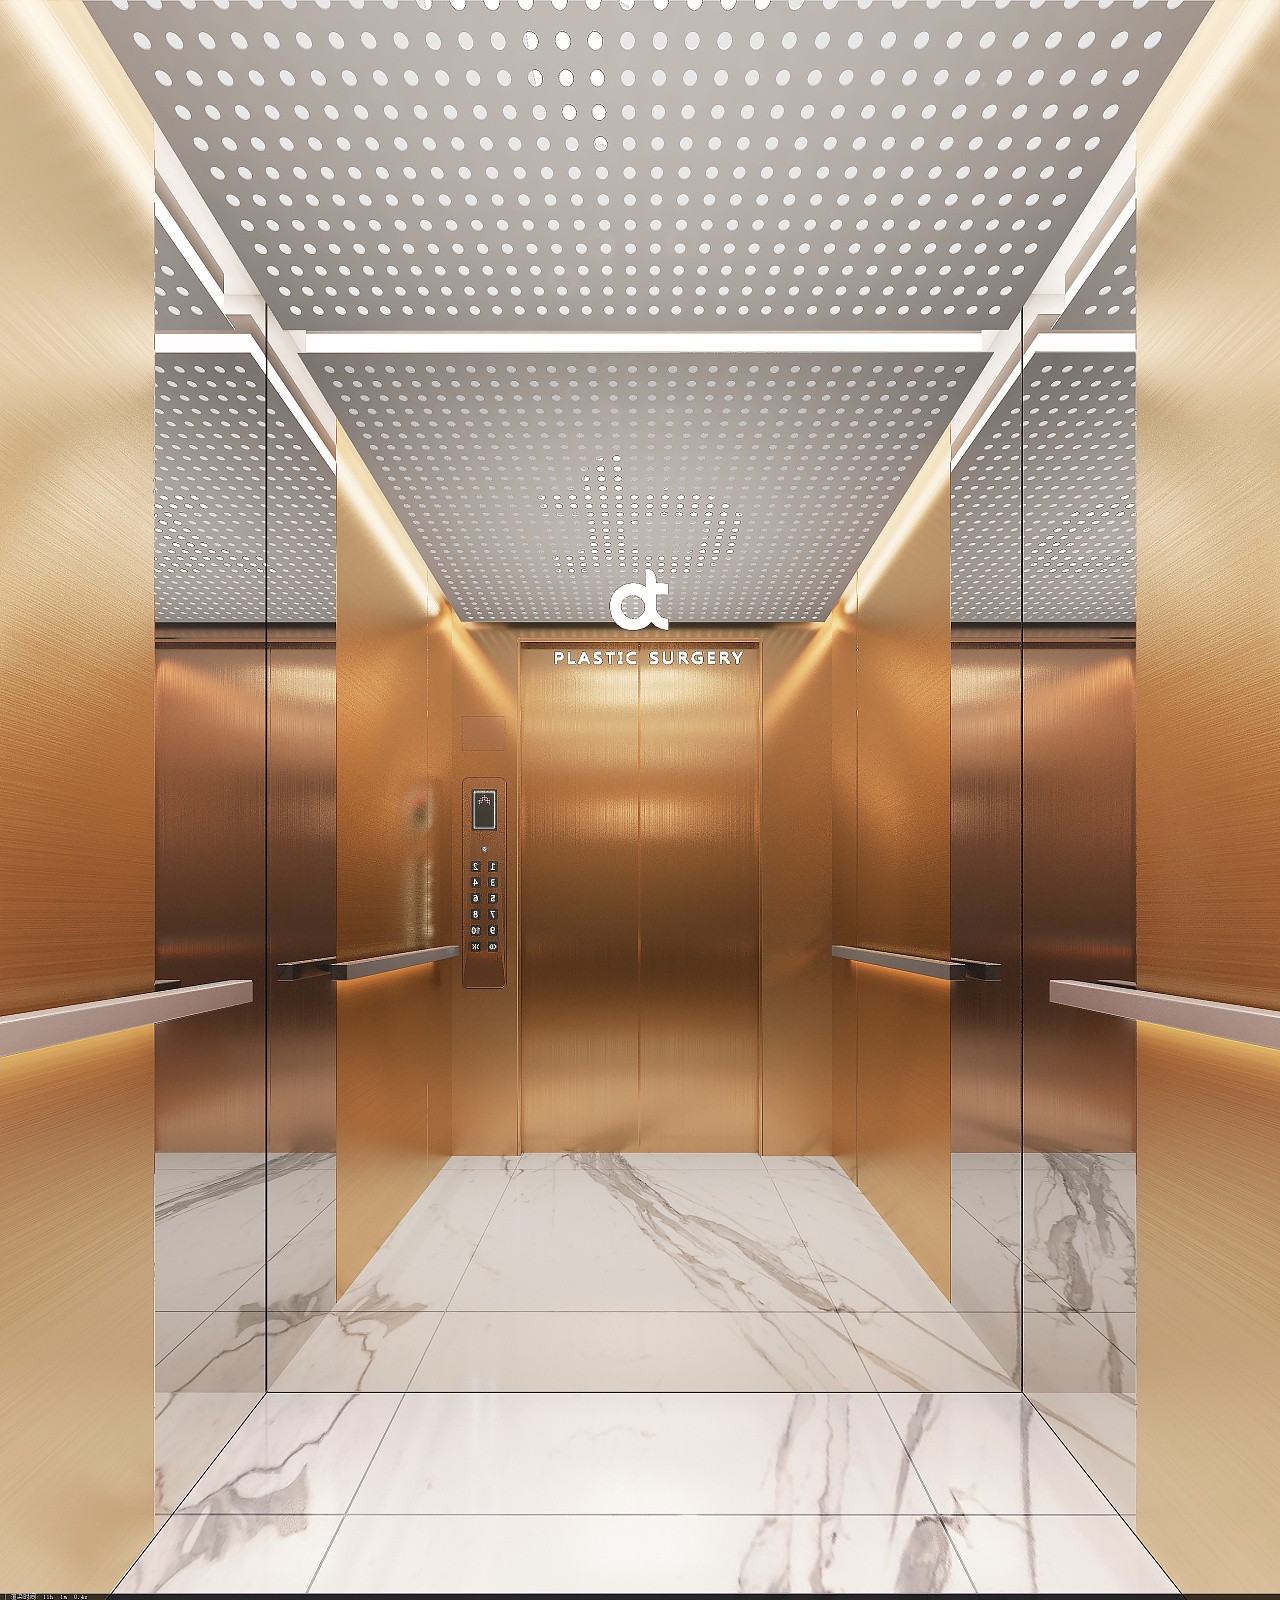 Elevator room design of OT plastic surgery hospital